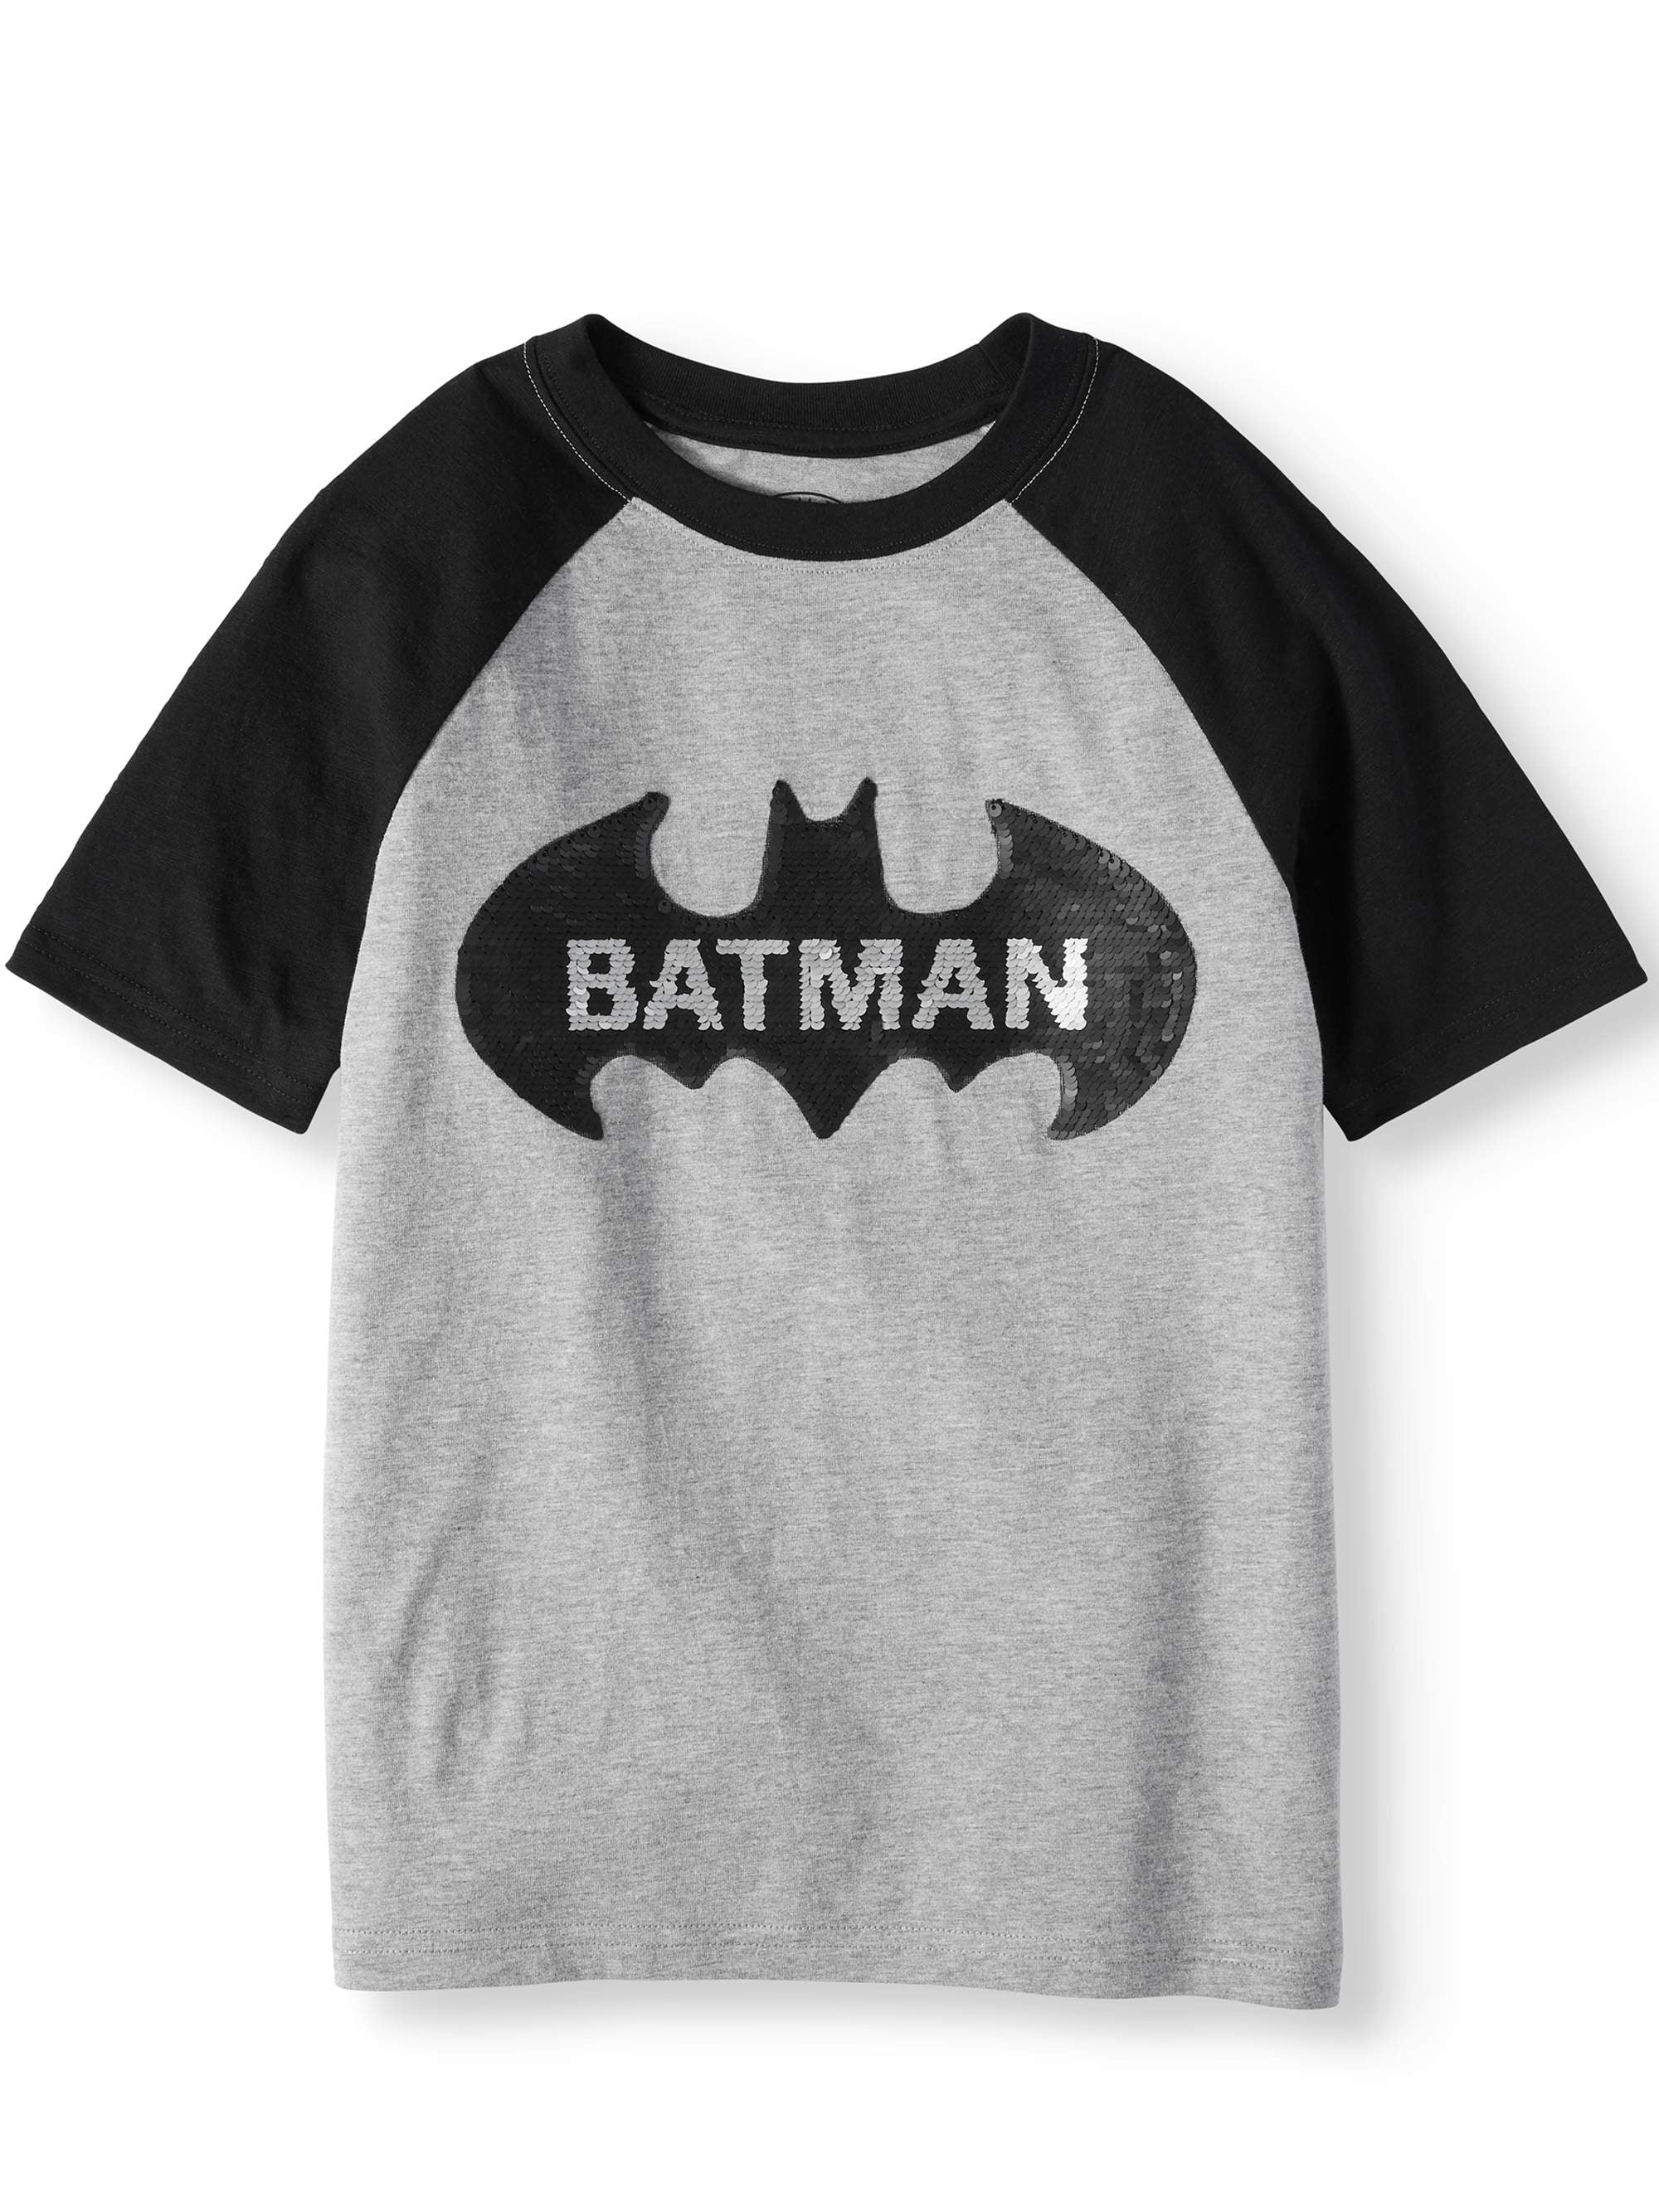 Askong Boys Girls Short Sleeve Magic Sequin Batman Superman T-Shirt Tops Sweatshirt Clothing for 1-8Years 